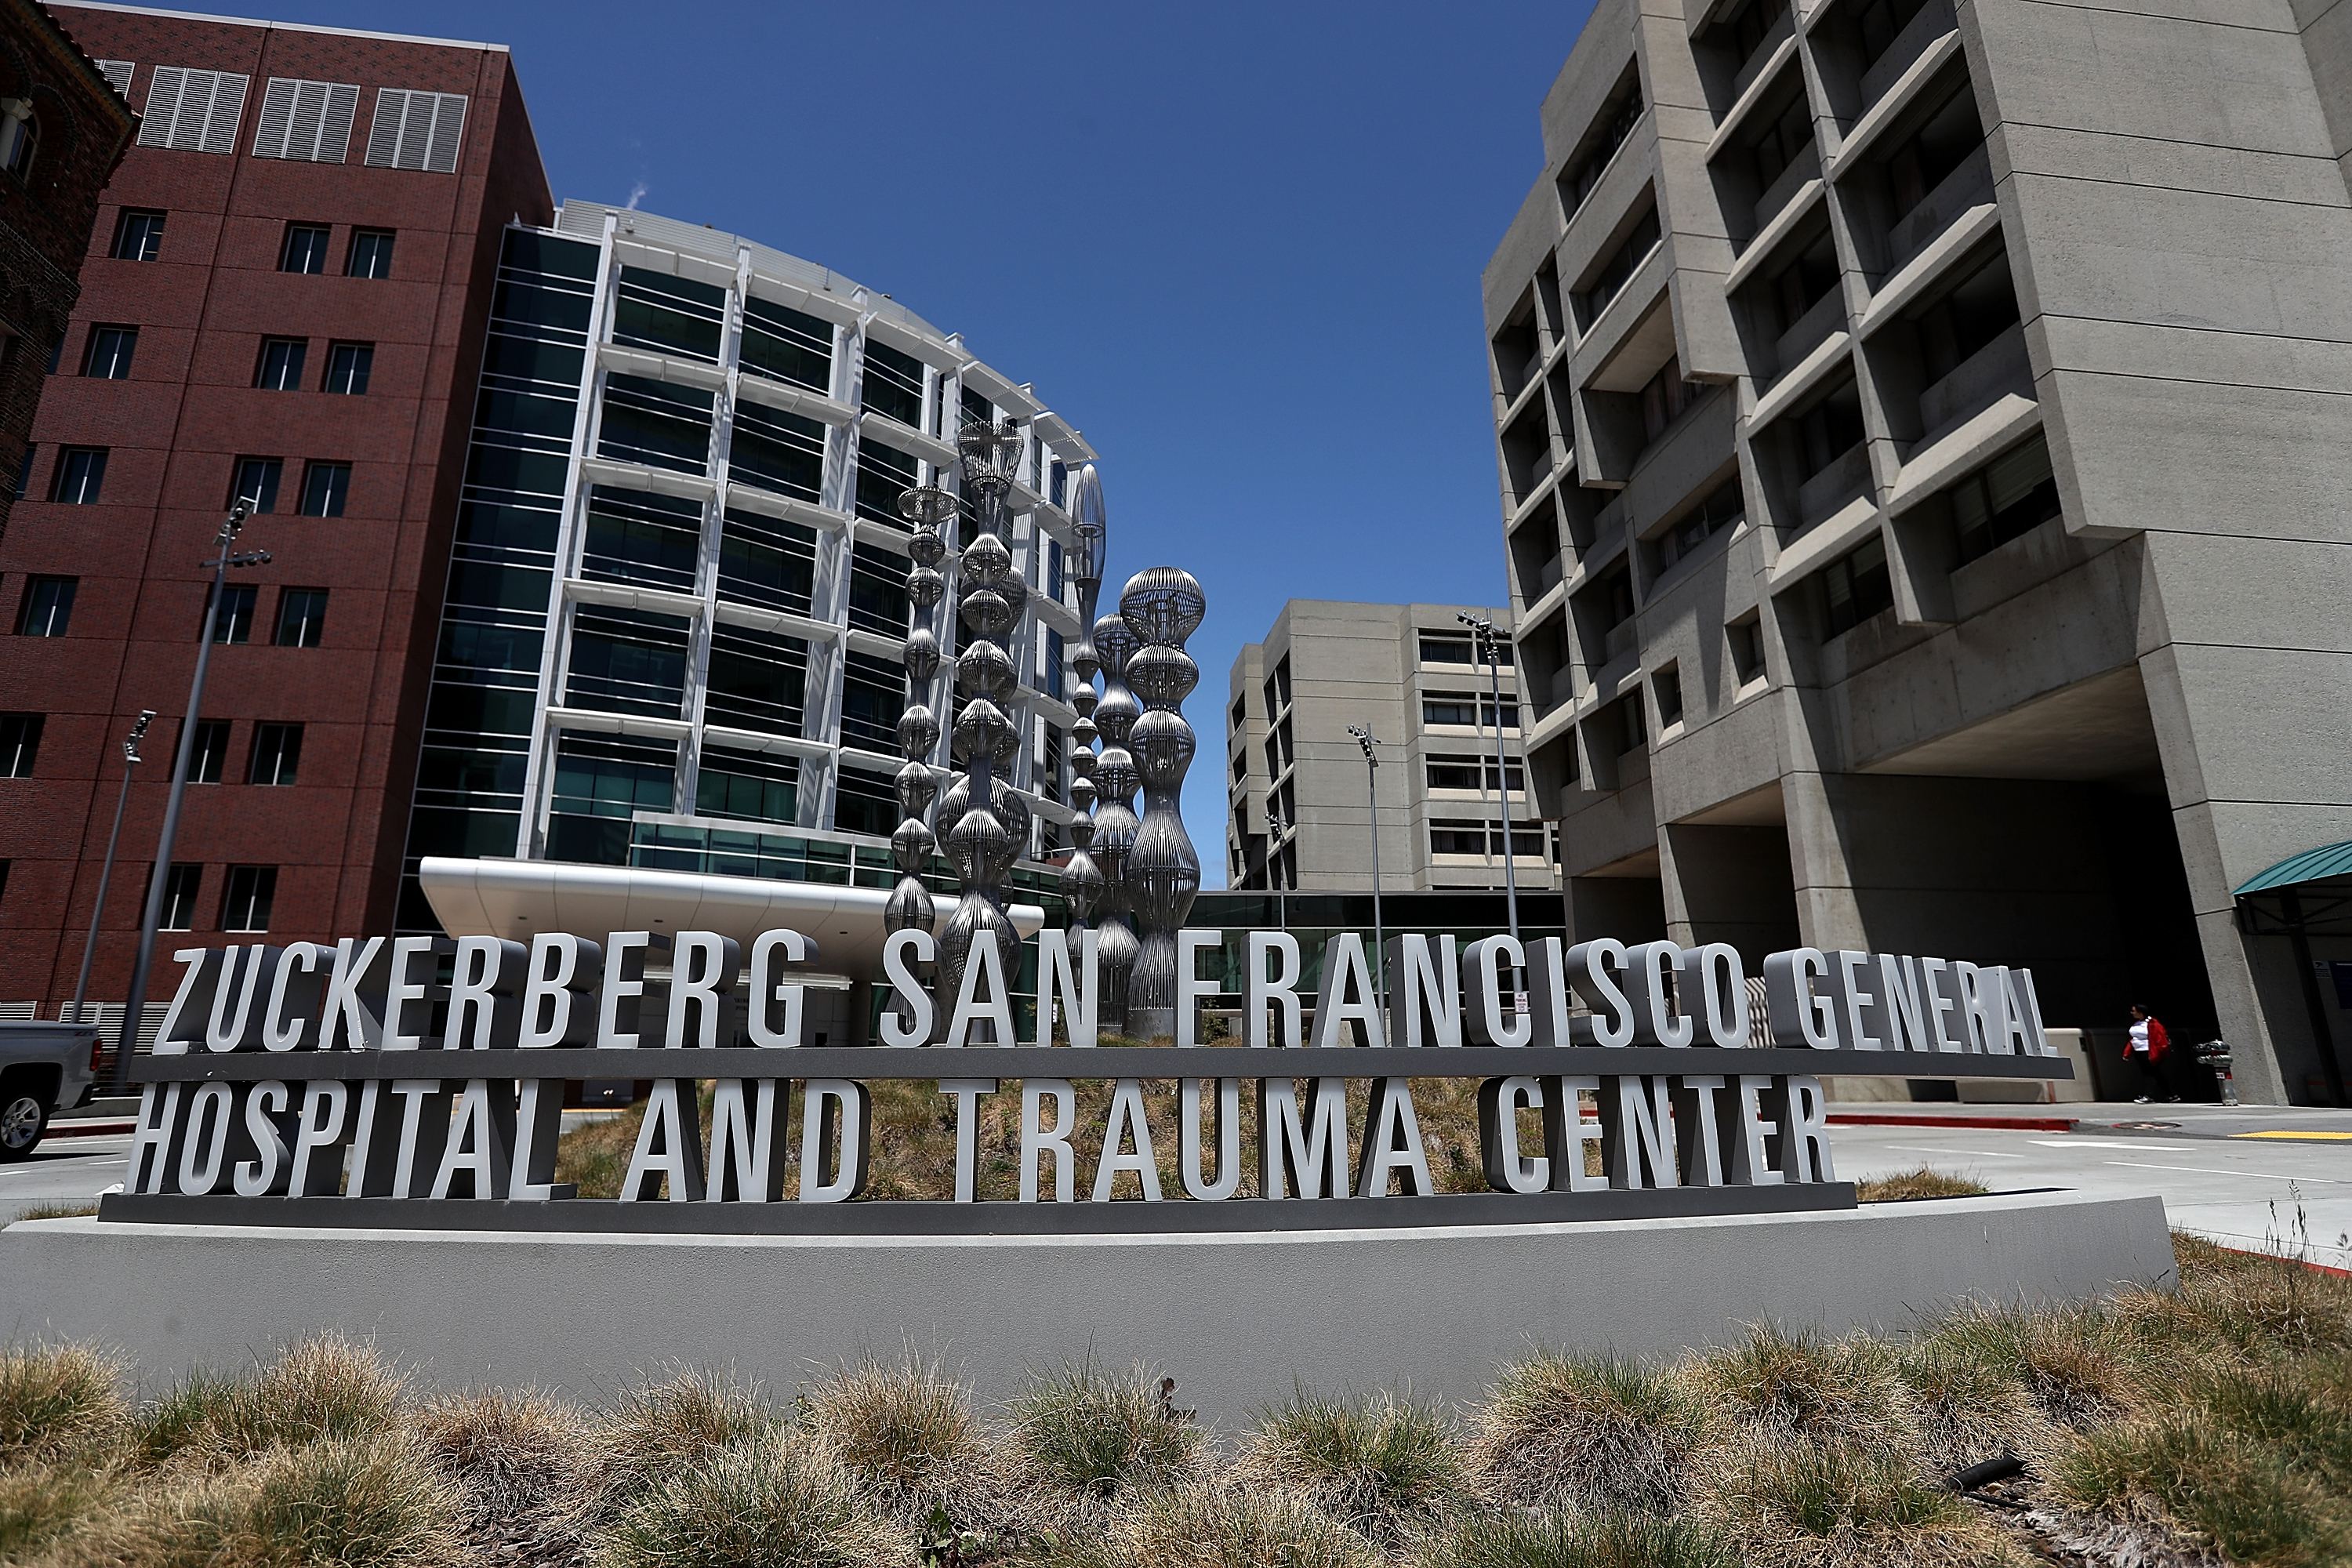 The Priscilla Chan And Mark Zuckerberg San Francisco General Hospital And Trauma Center